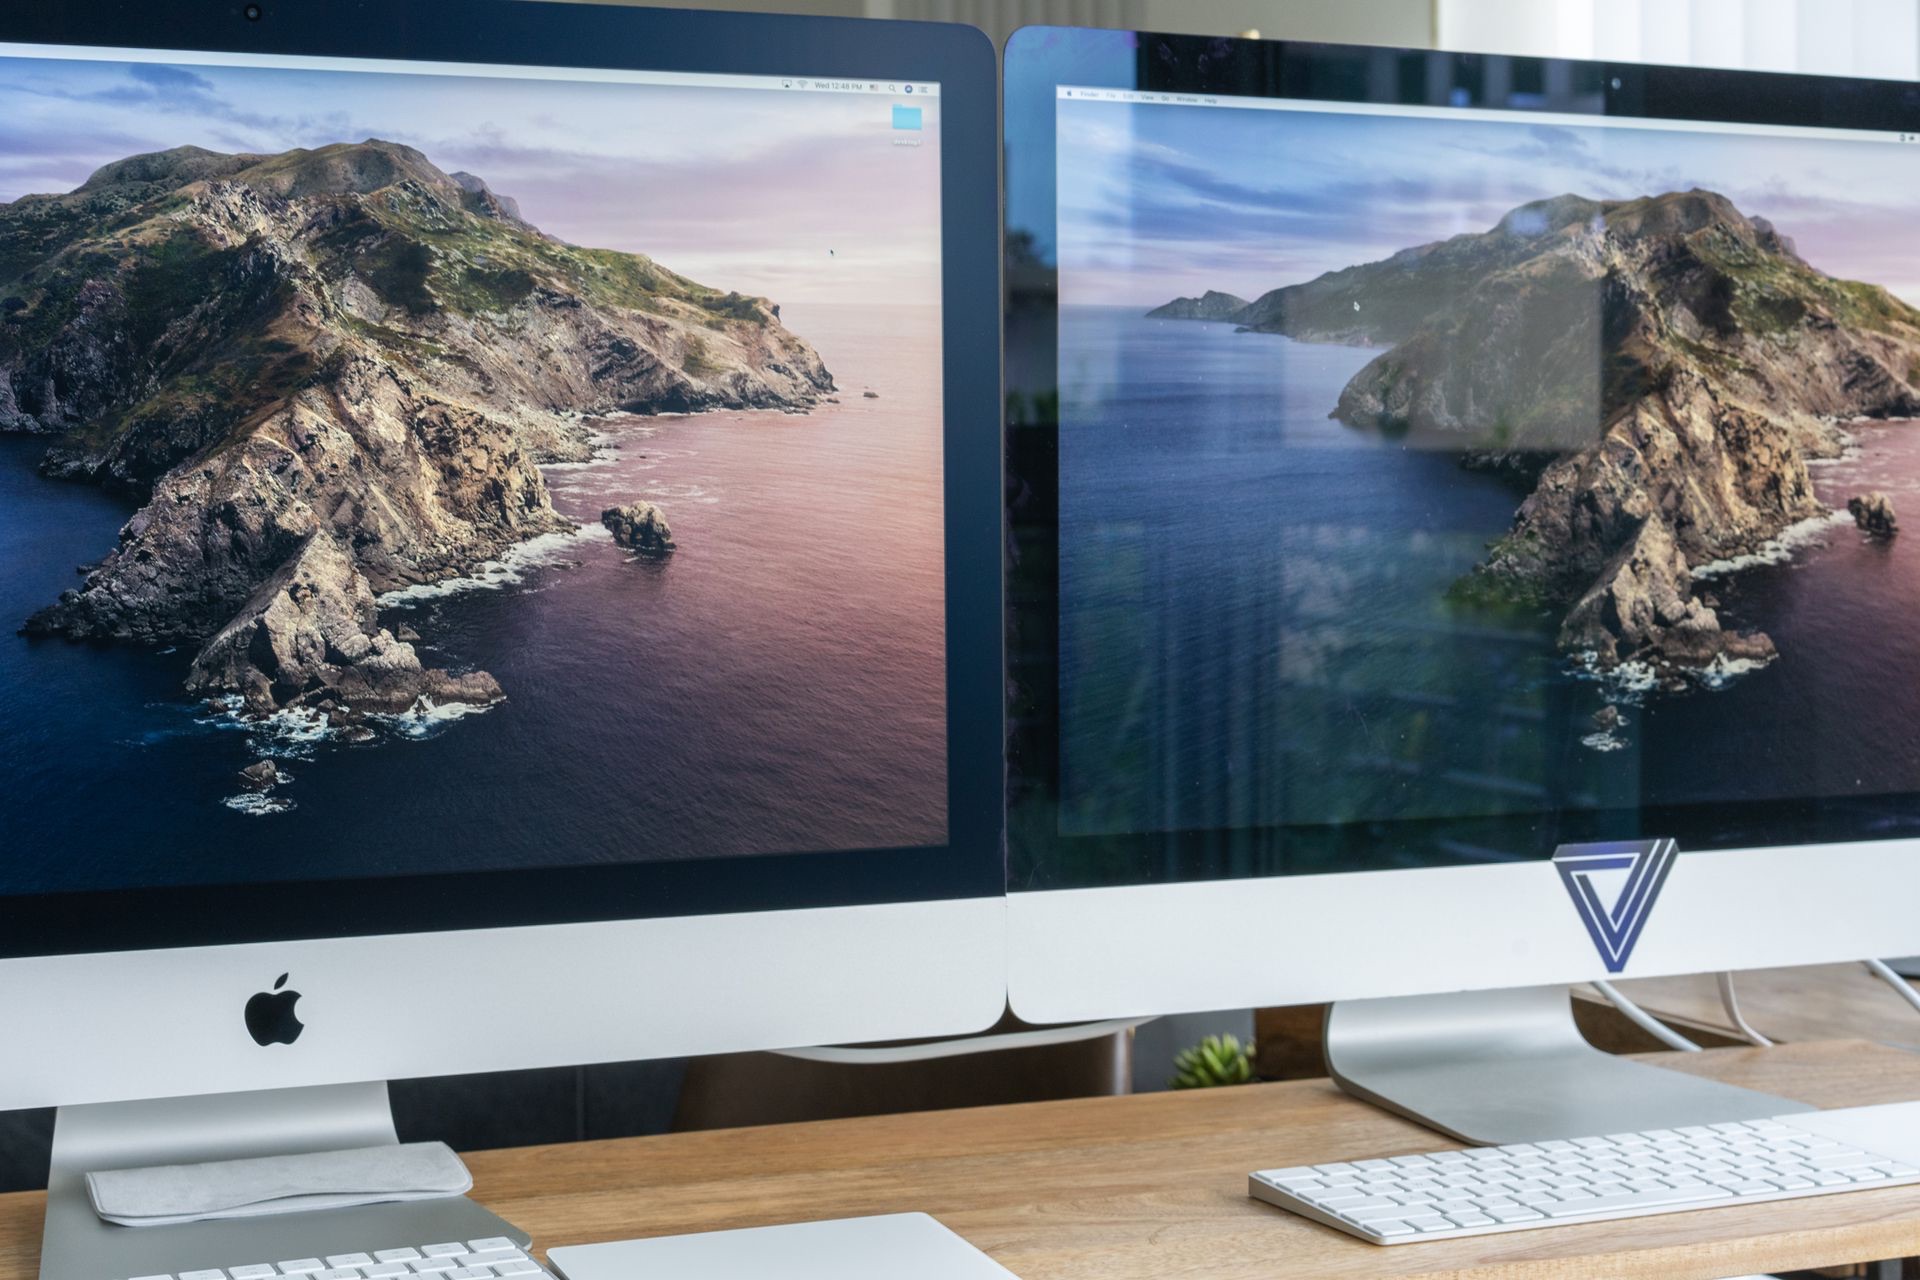 iMac: Don't Buy! New 2021 Model Coming